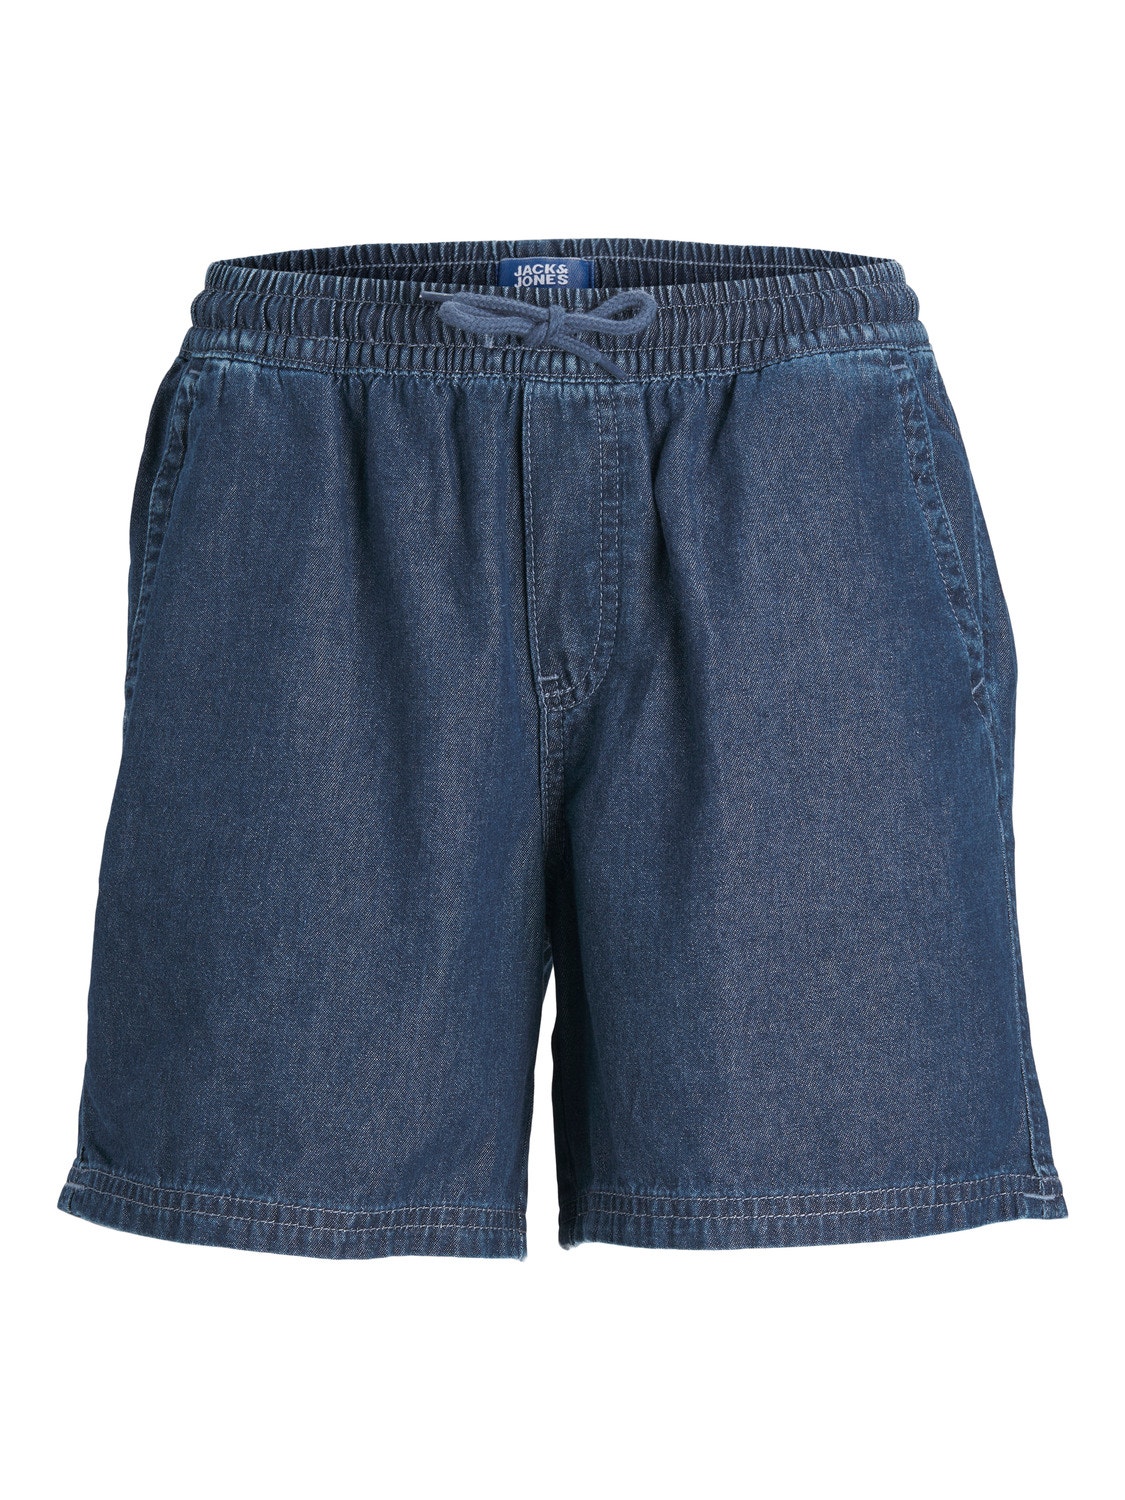 Jack & Jones Regular Fit Jeans-Shorts Für jungs -Blue Denim - 12210579